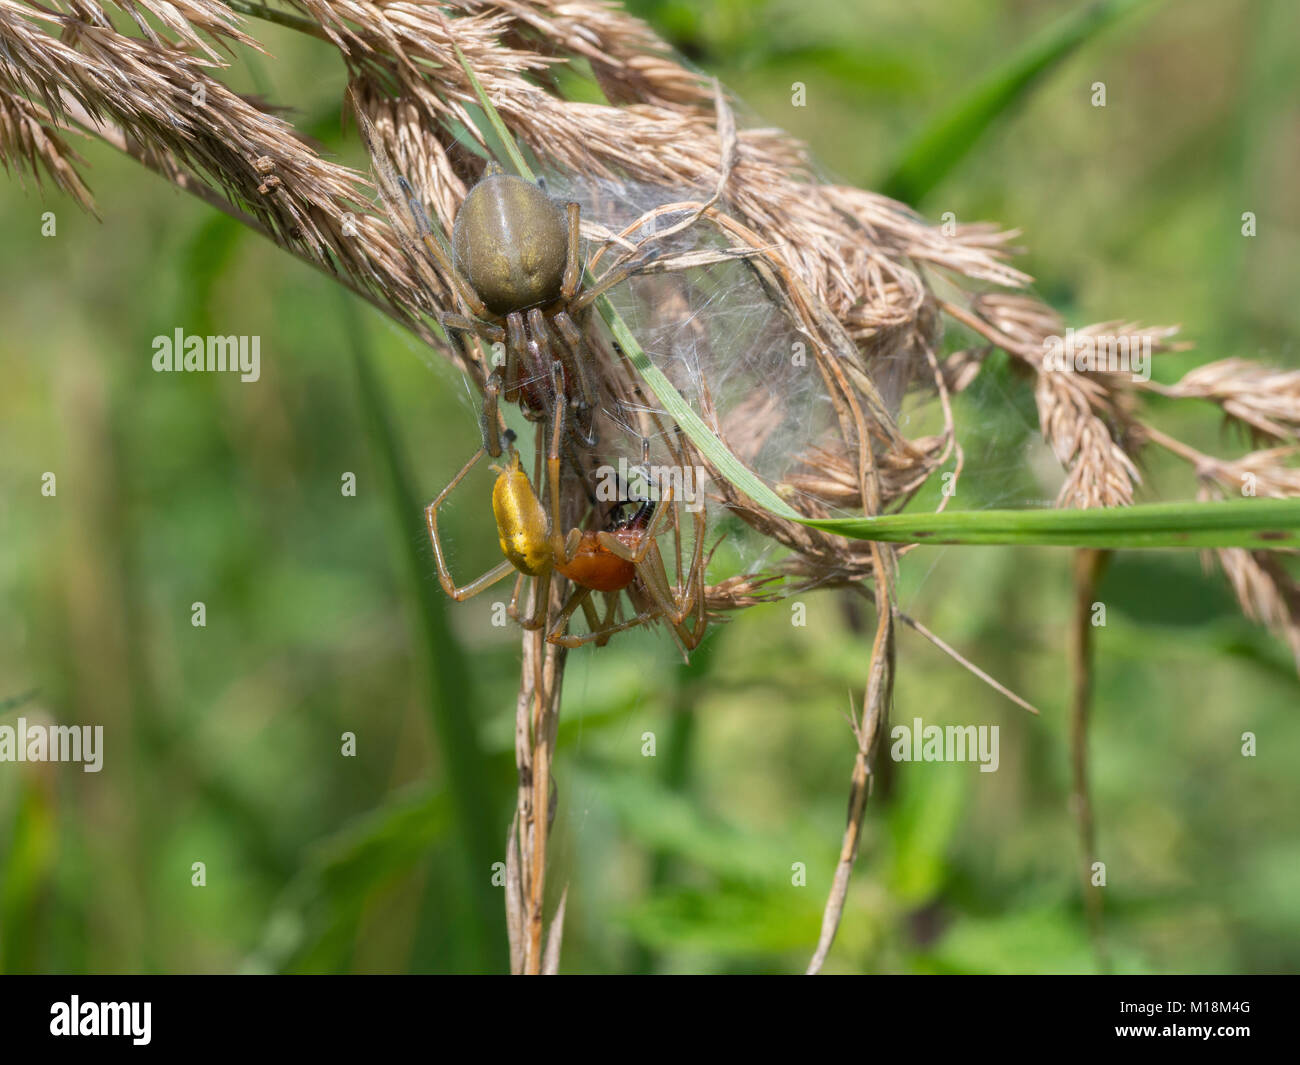 Yellow sac spider, Cheiracanthium punctorium Stock Photo